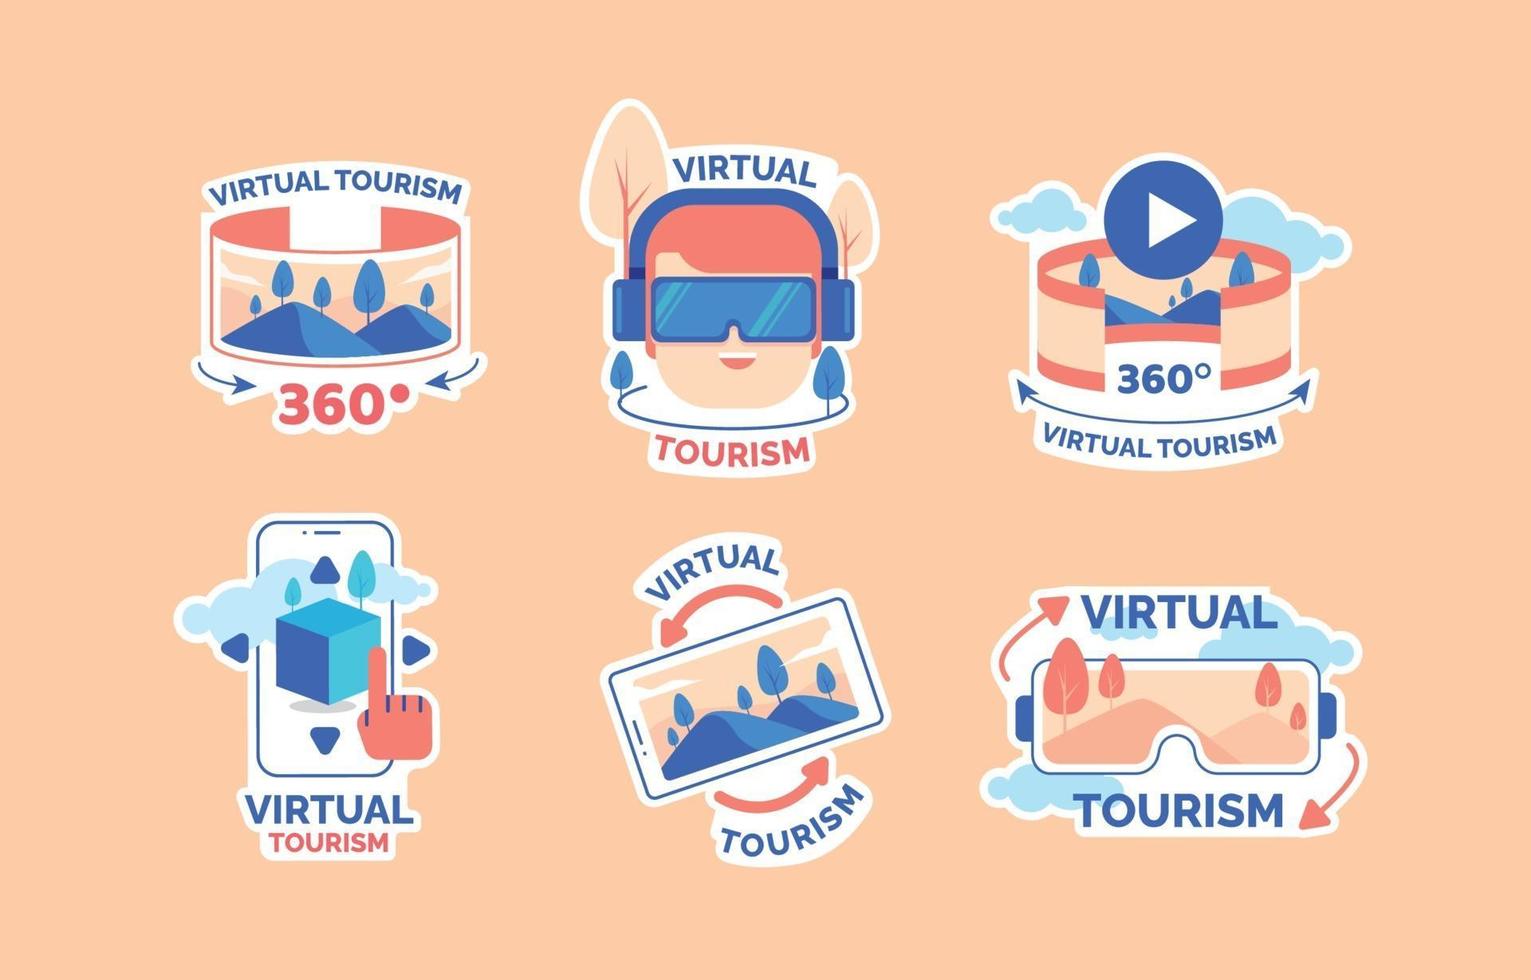 virtuell turism vr konceptet klistermärke vektor